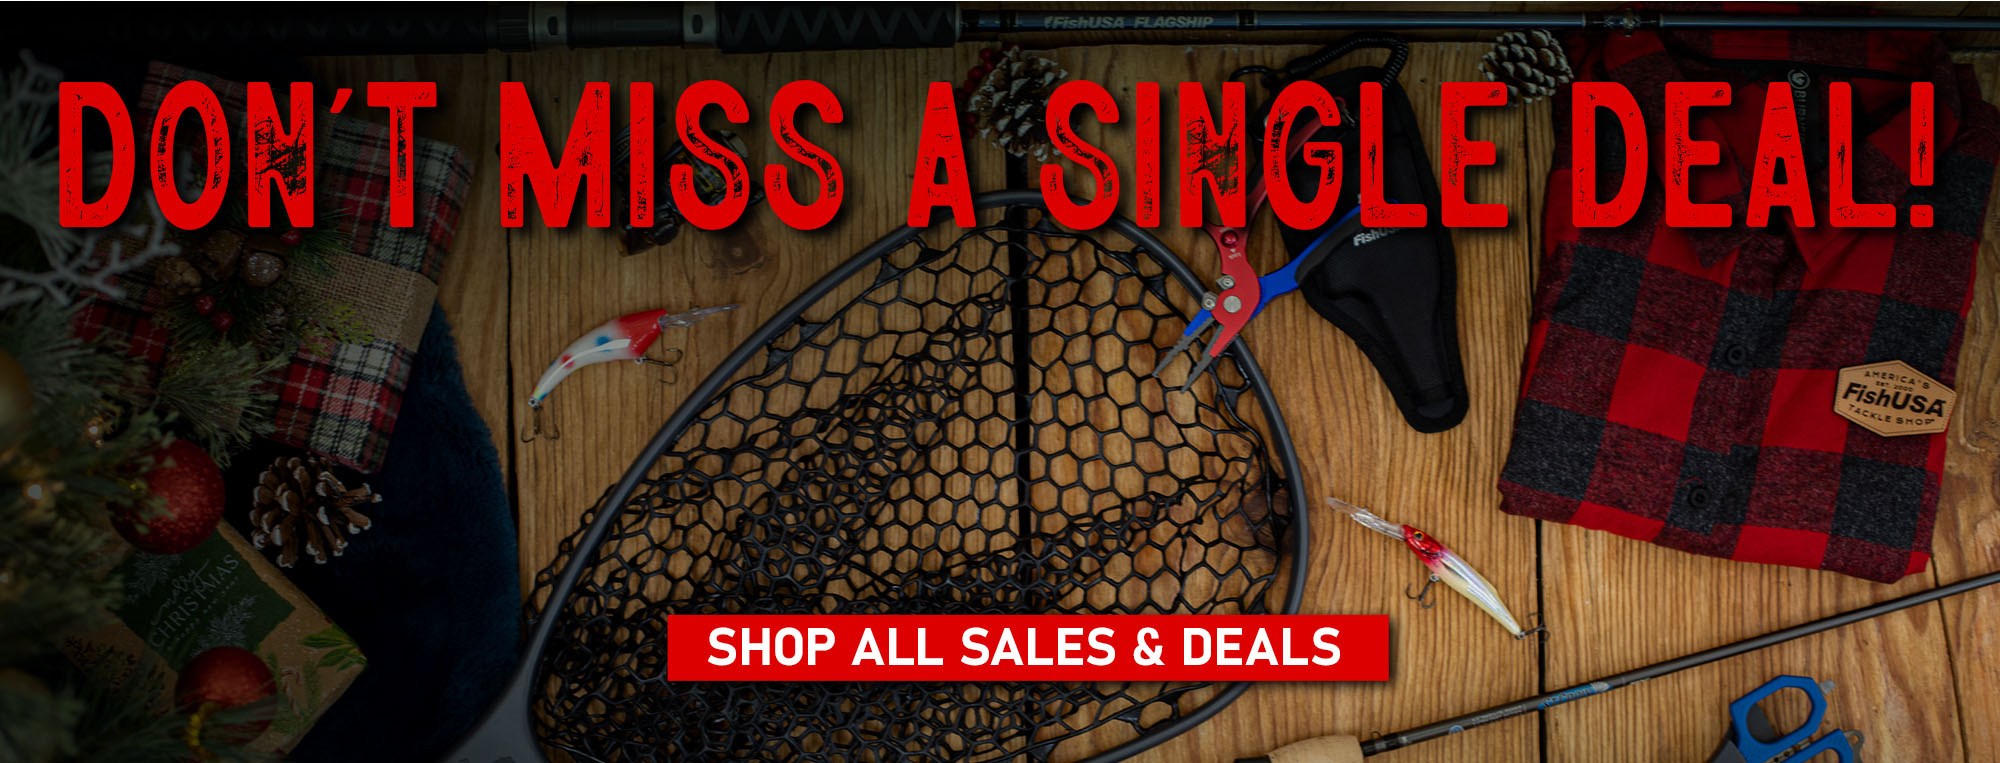 Don't Miss A Single Deal Shop All Sales & Deals